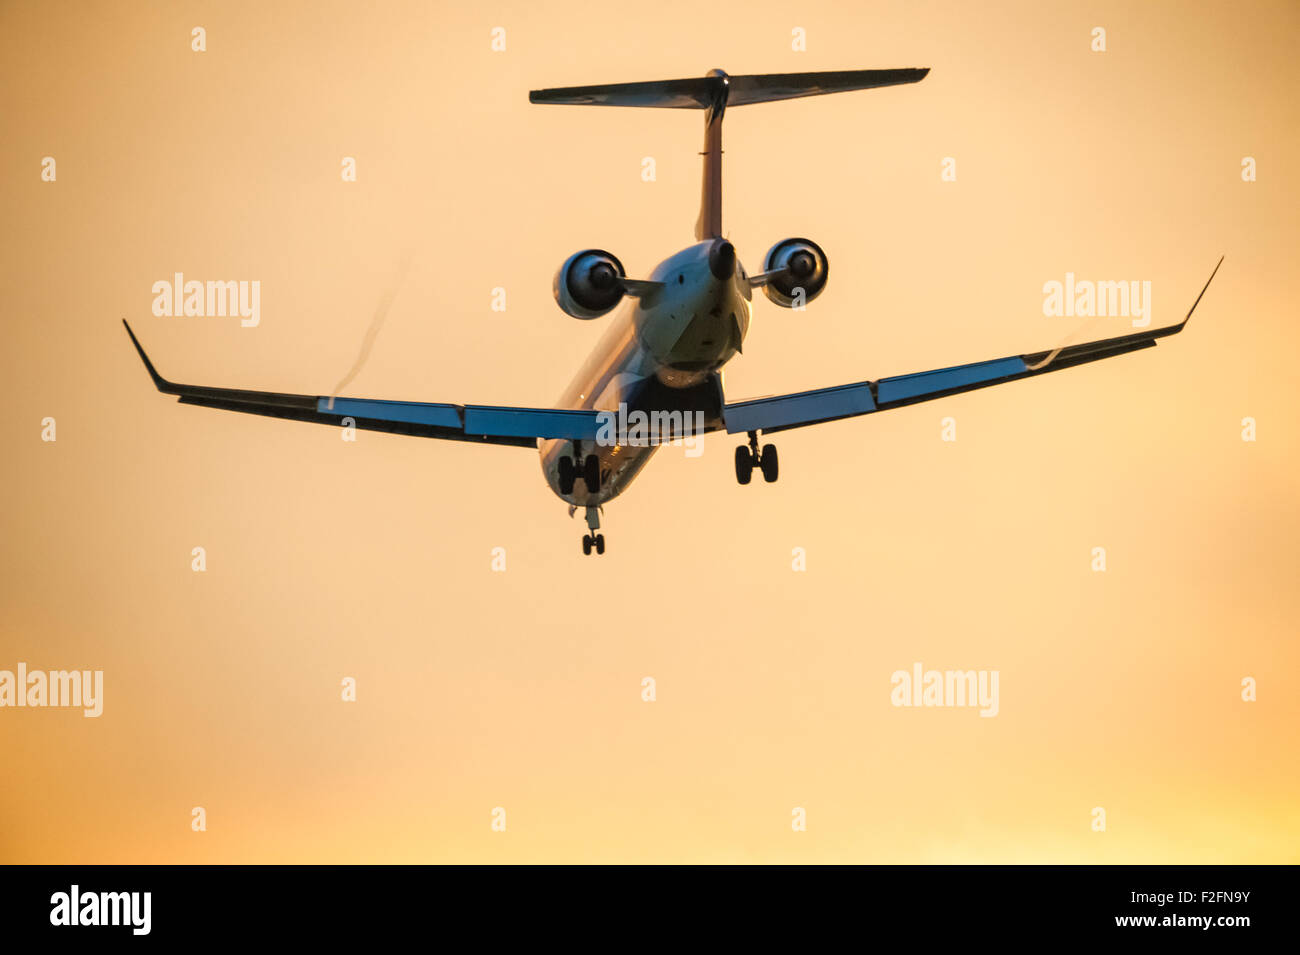 Airline passenger jet descends for landing under an orange sunset sky. Stock Photo